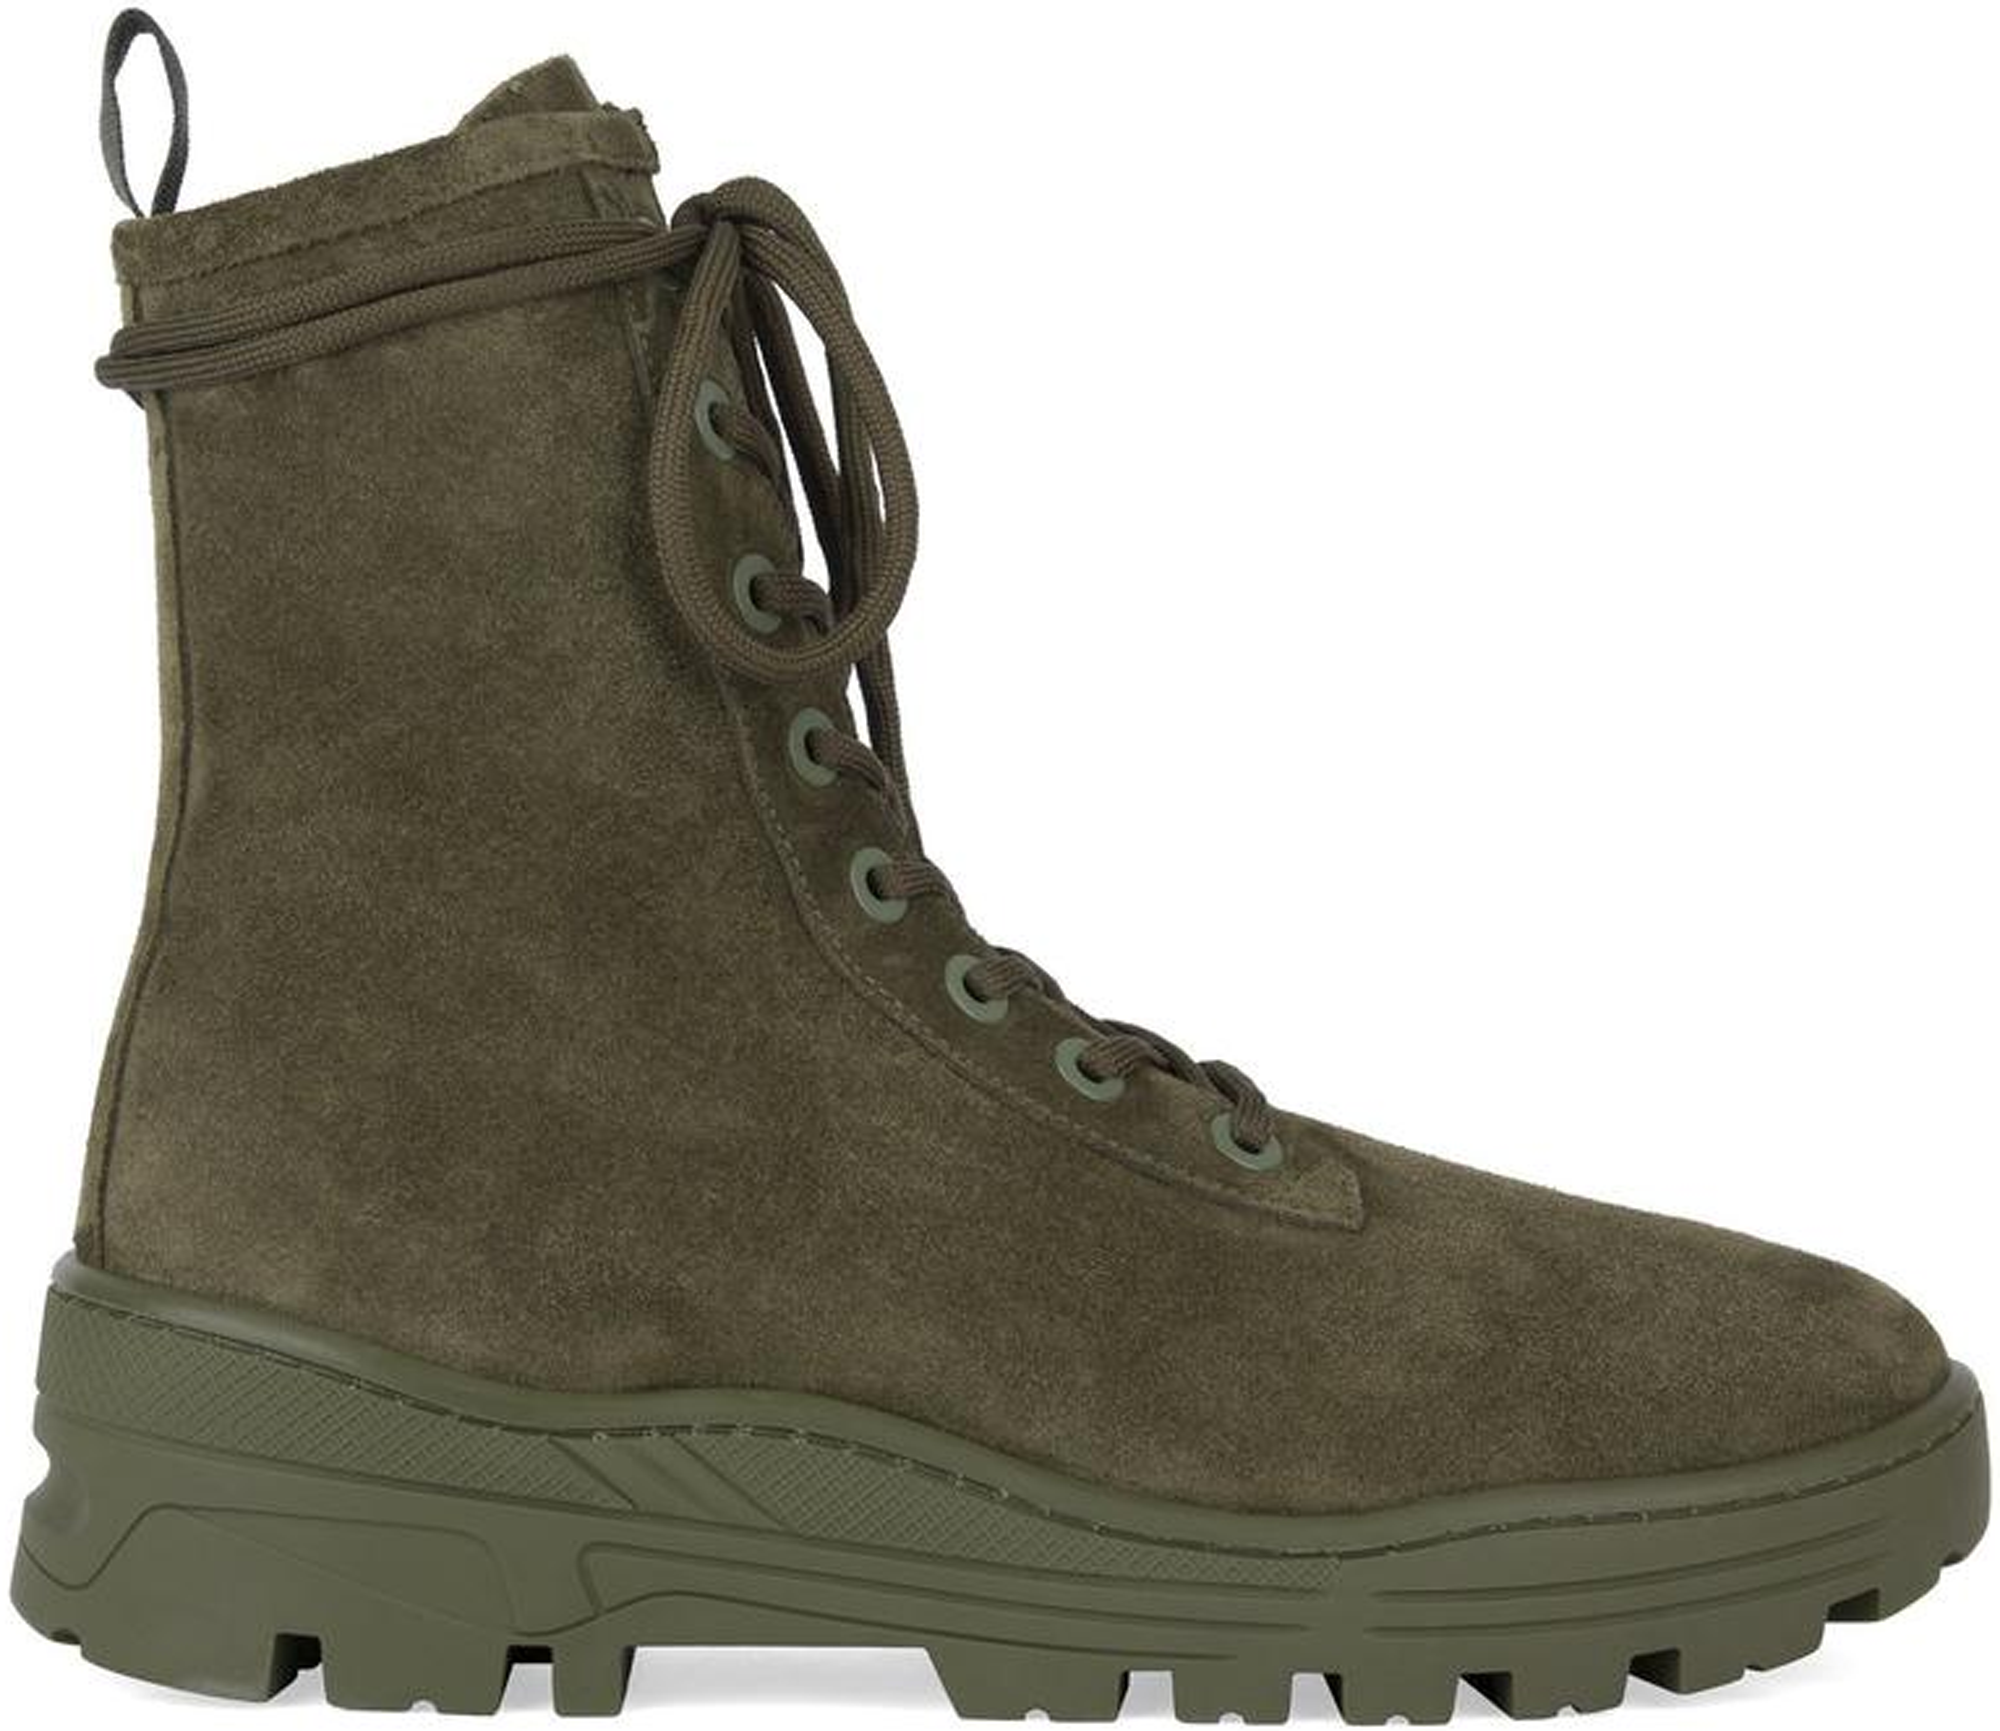 yeezy military boots season 6